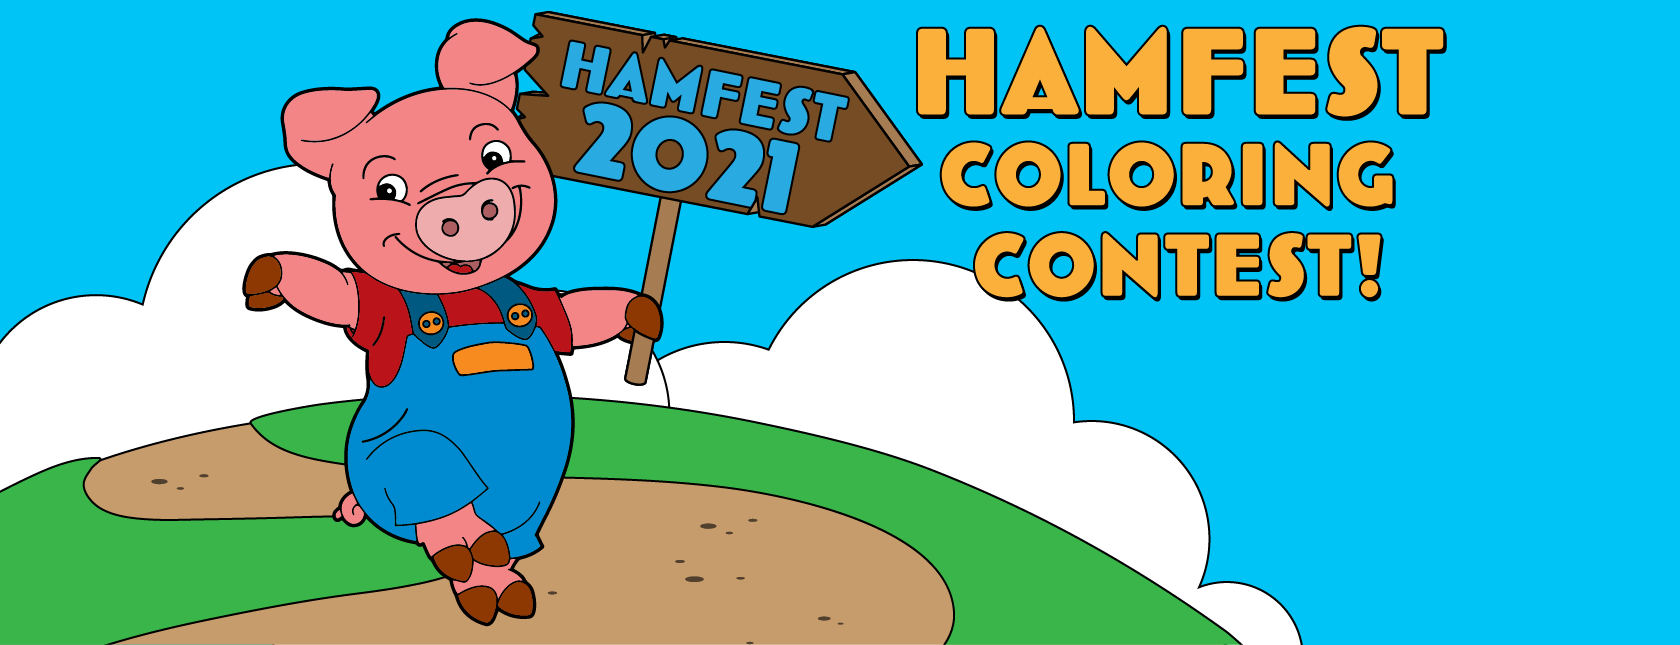 Ham Festival Coloring Contest